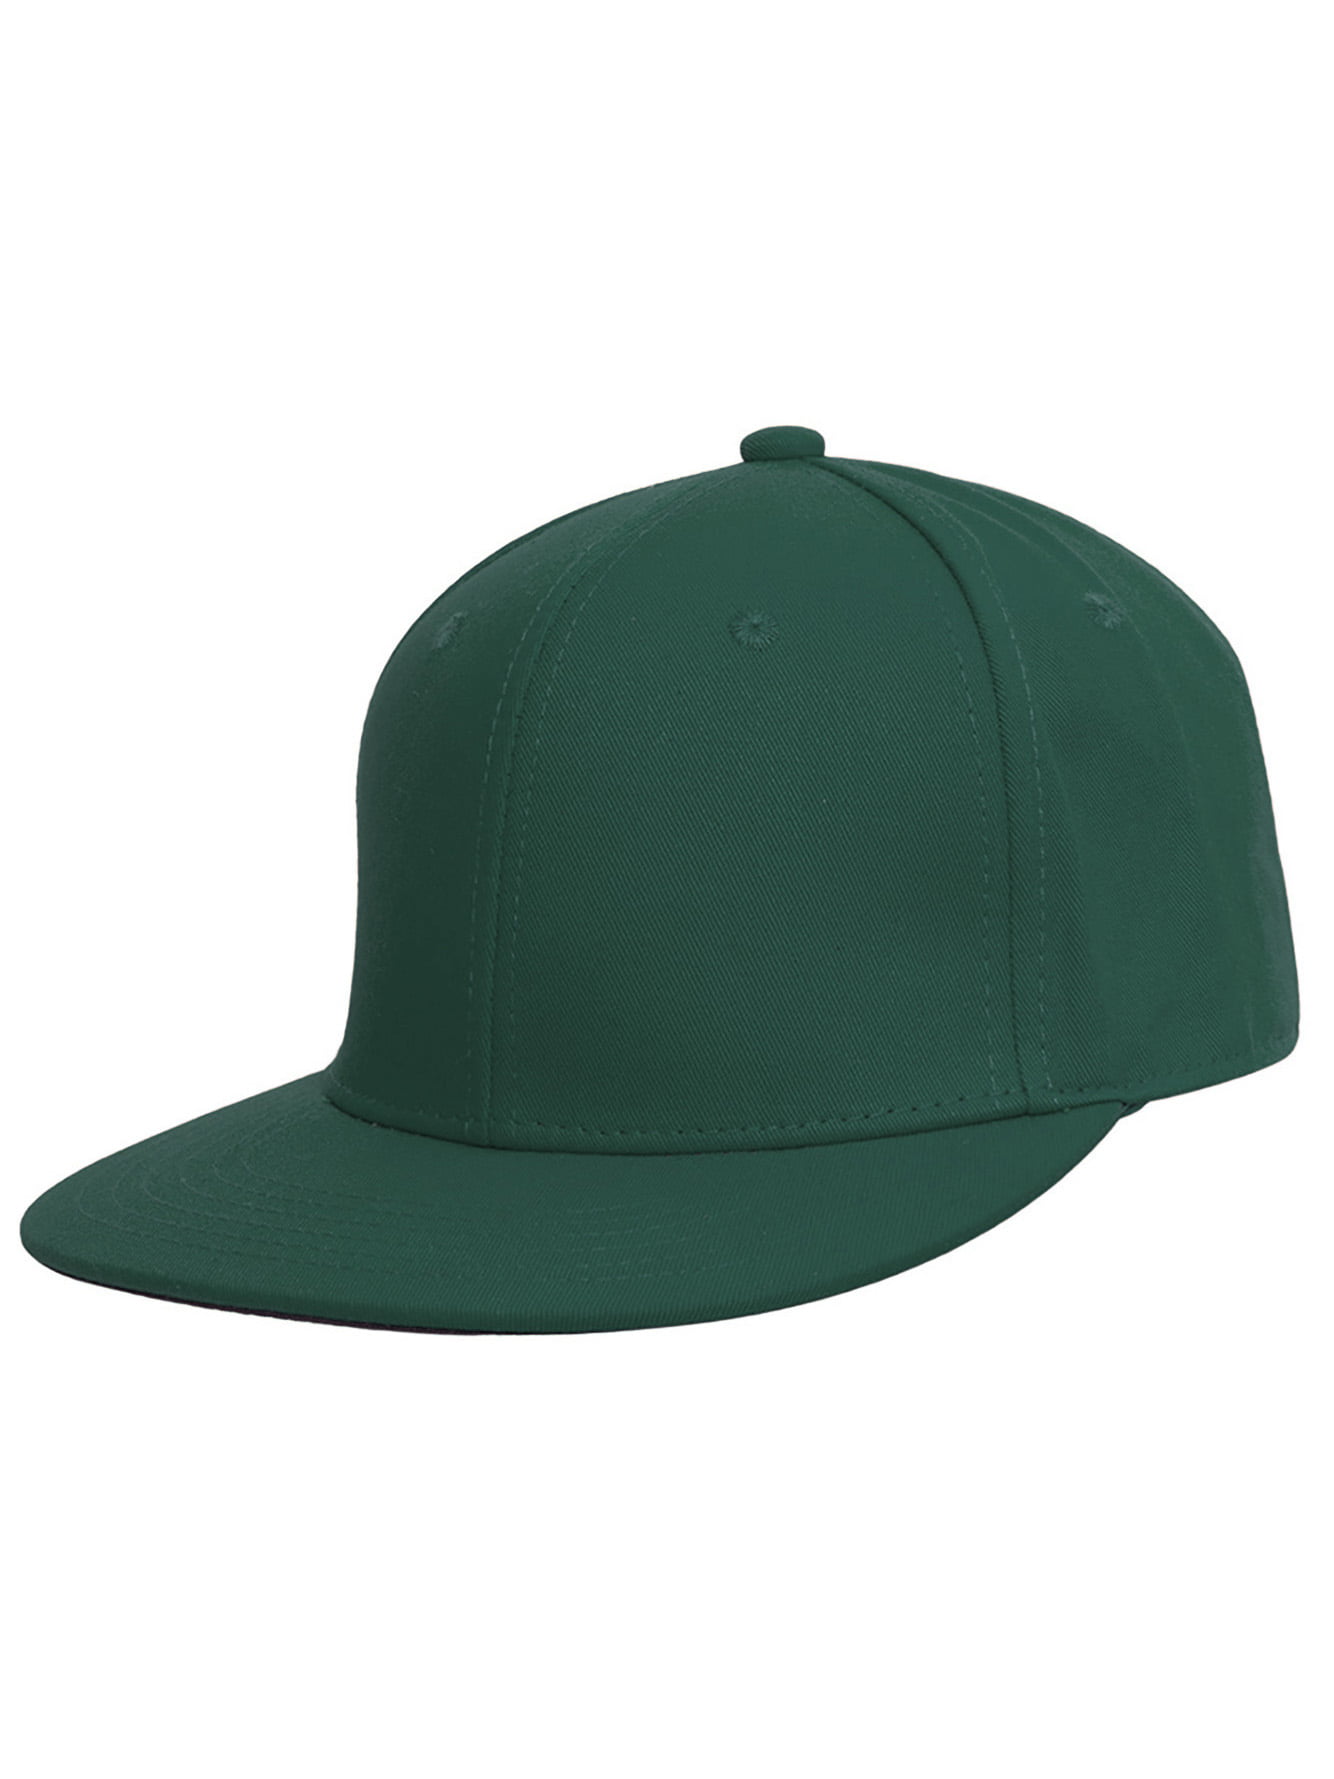 Plain Green Flat Peak Fitted Baseball Cap 7 7/8" 